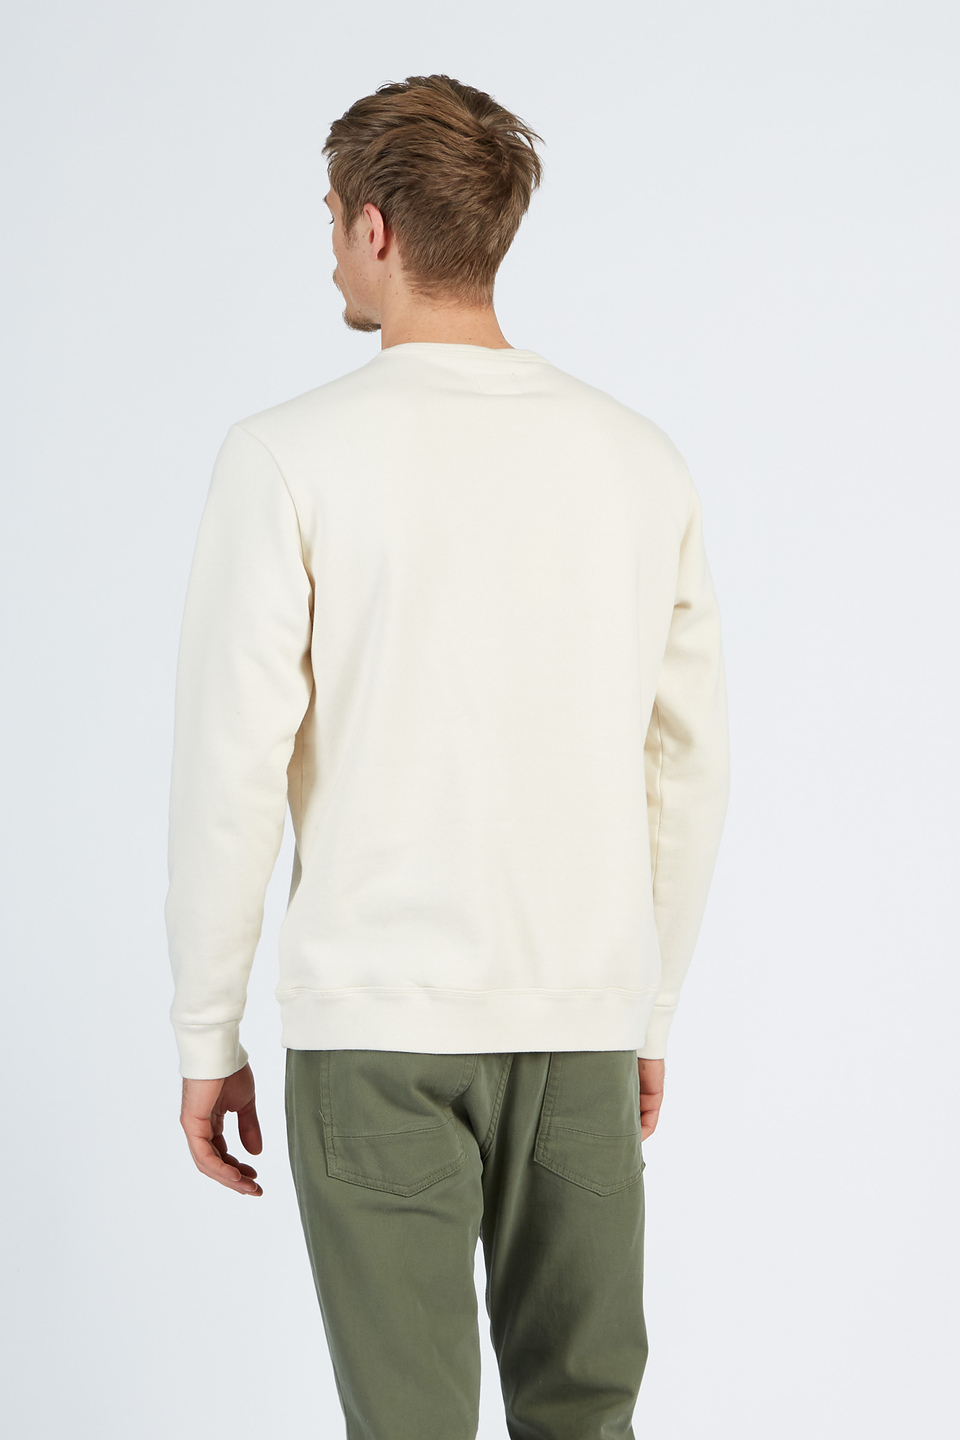 Men’s sweatshirt in 100% cotton regular fit | La Martina - Official Online Shop